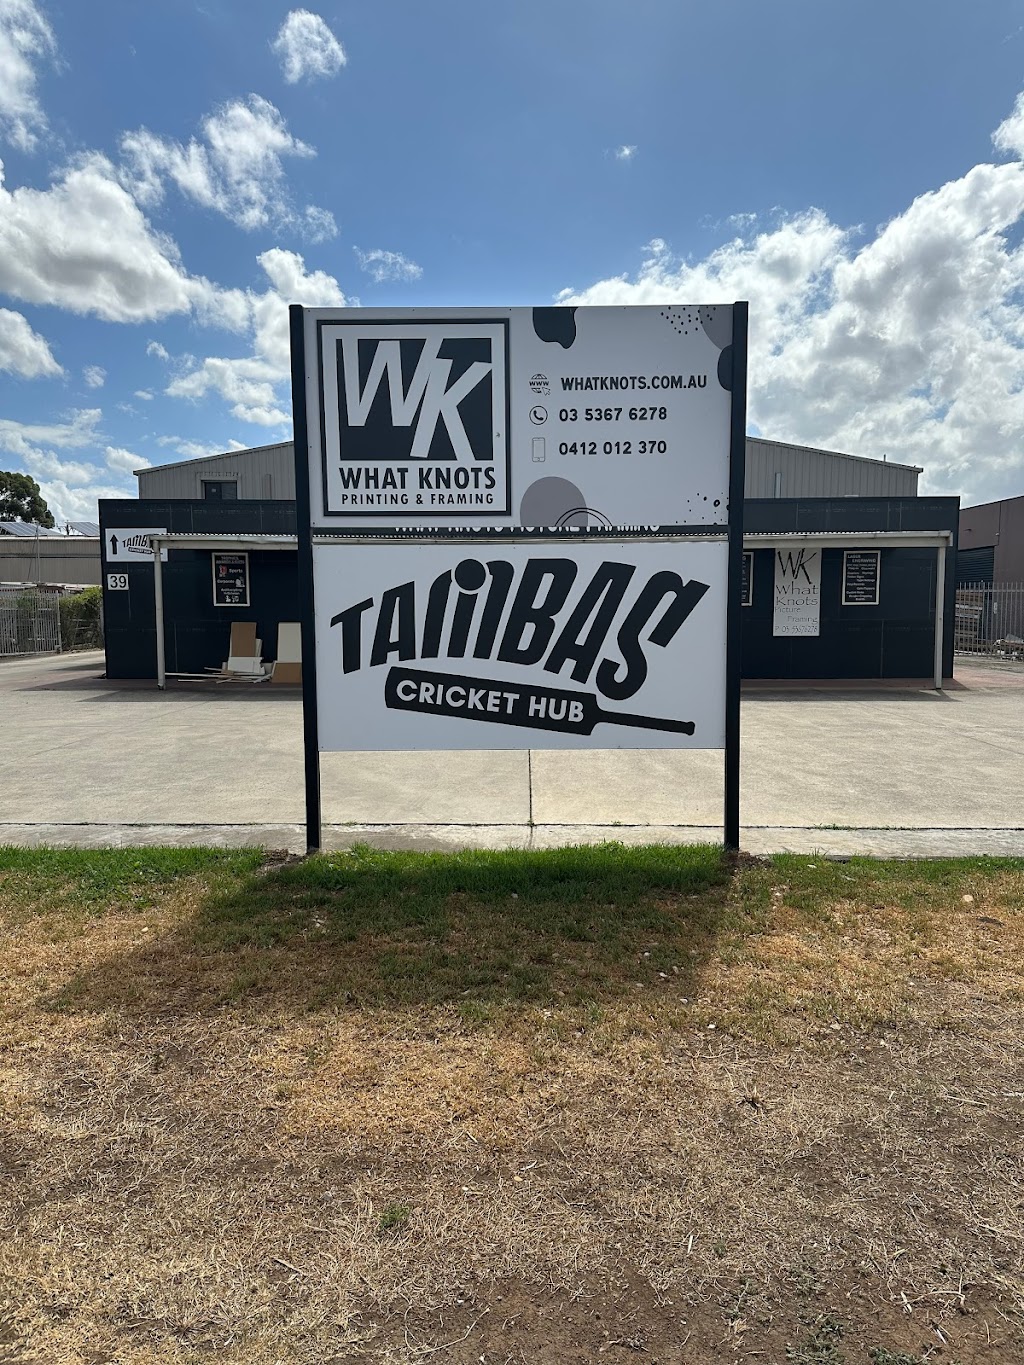 Tambas Cricket Hub | 39 Fisken St, Maddingley VIC 3340, Australia | Phone: 0497 953 202